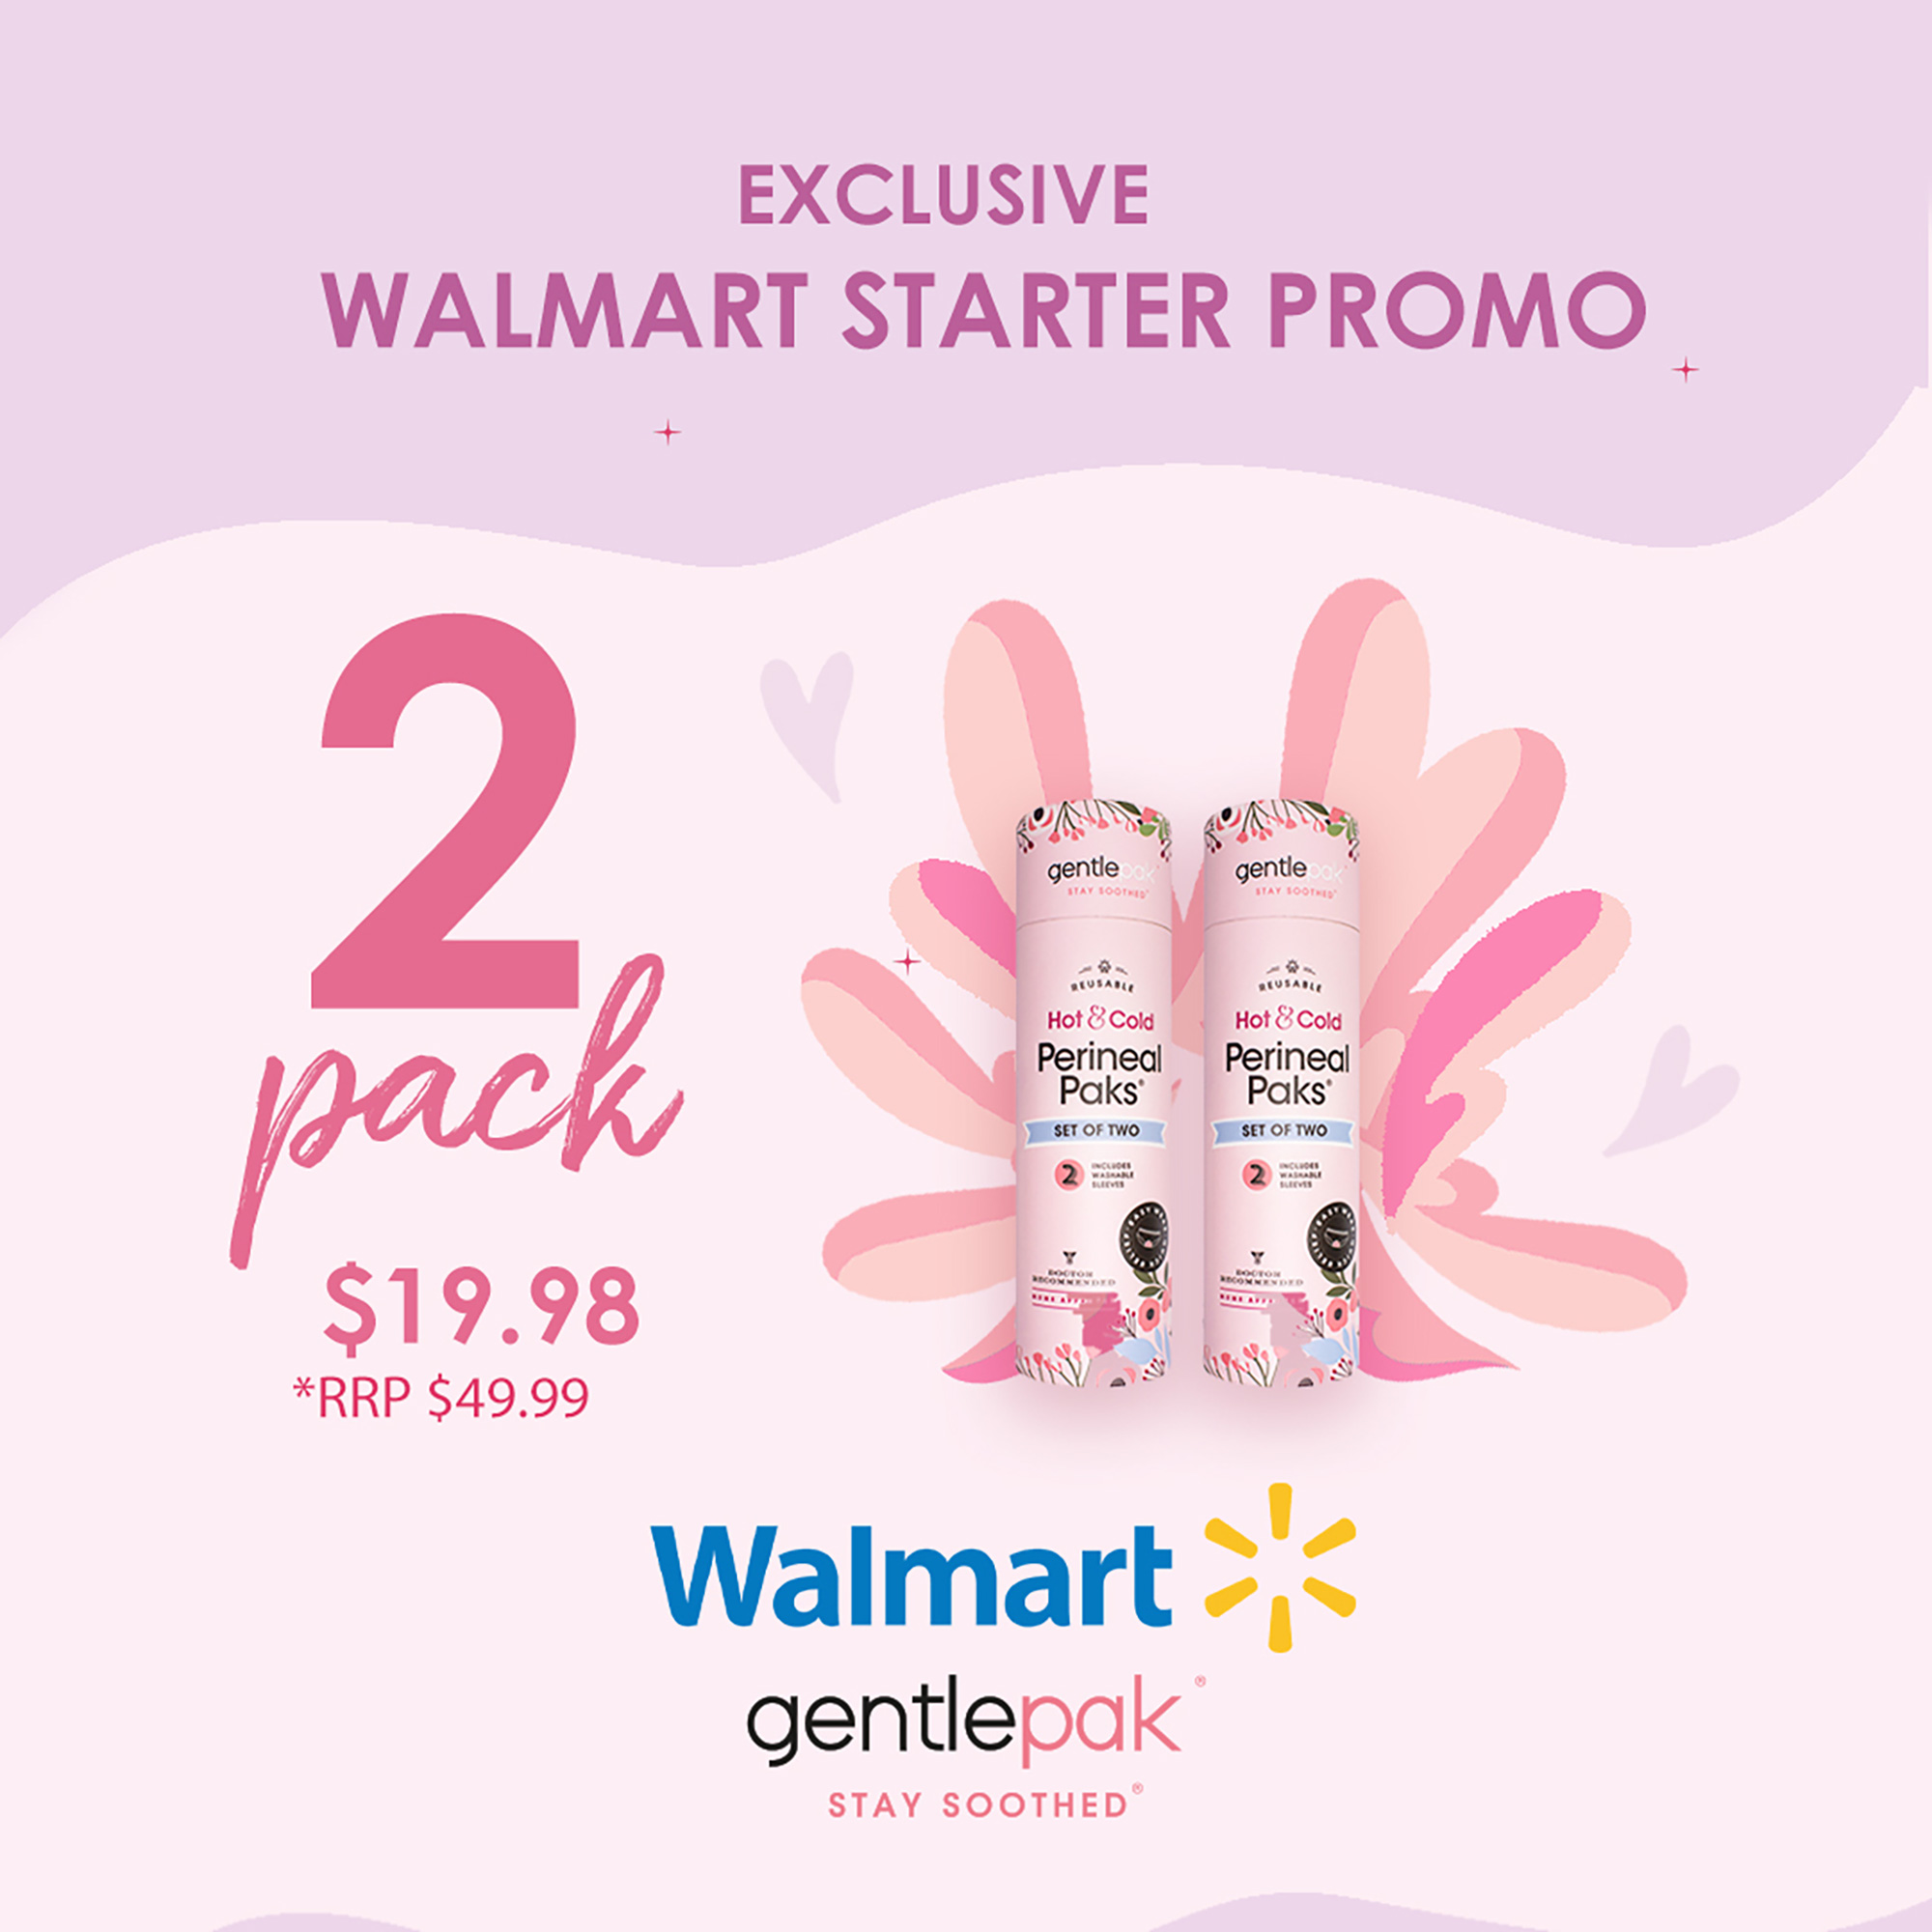 gentlepak® – 2 pack Walmart Promo